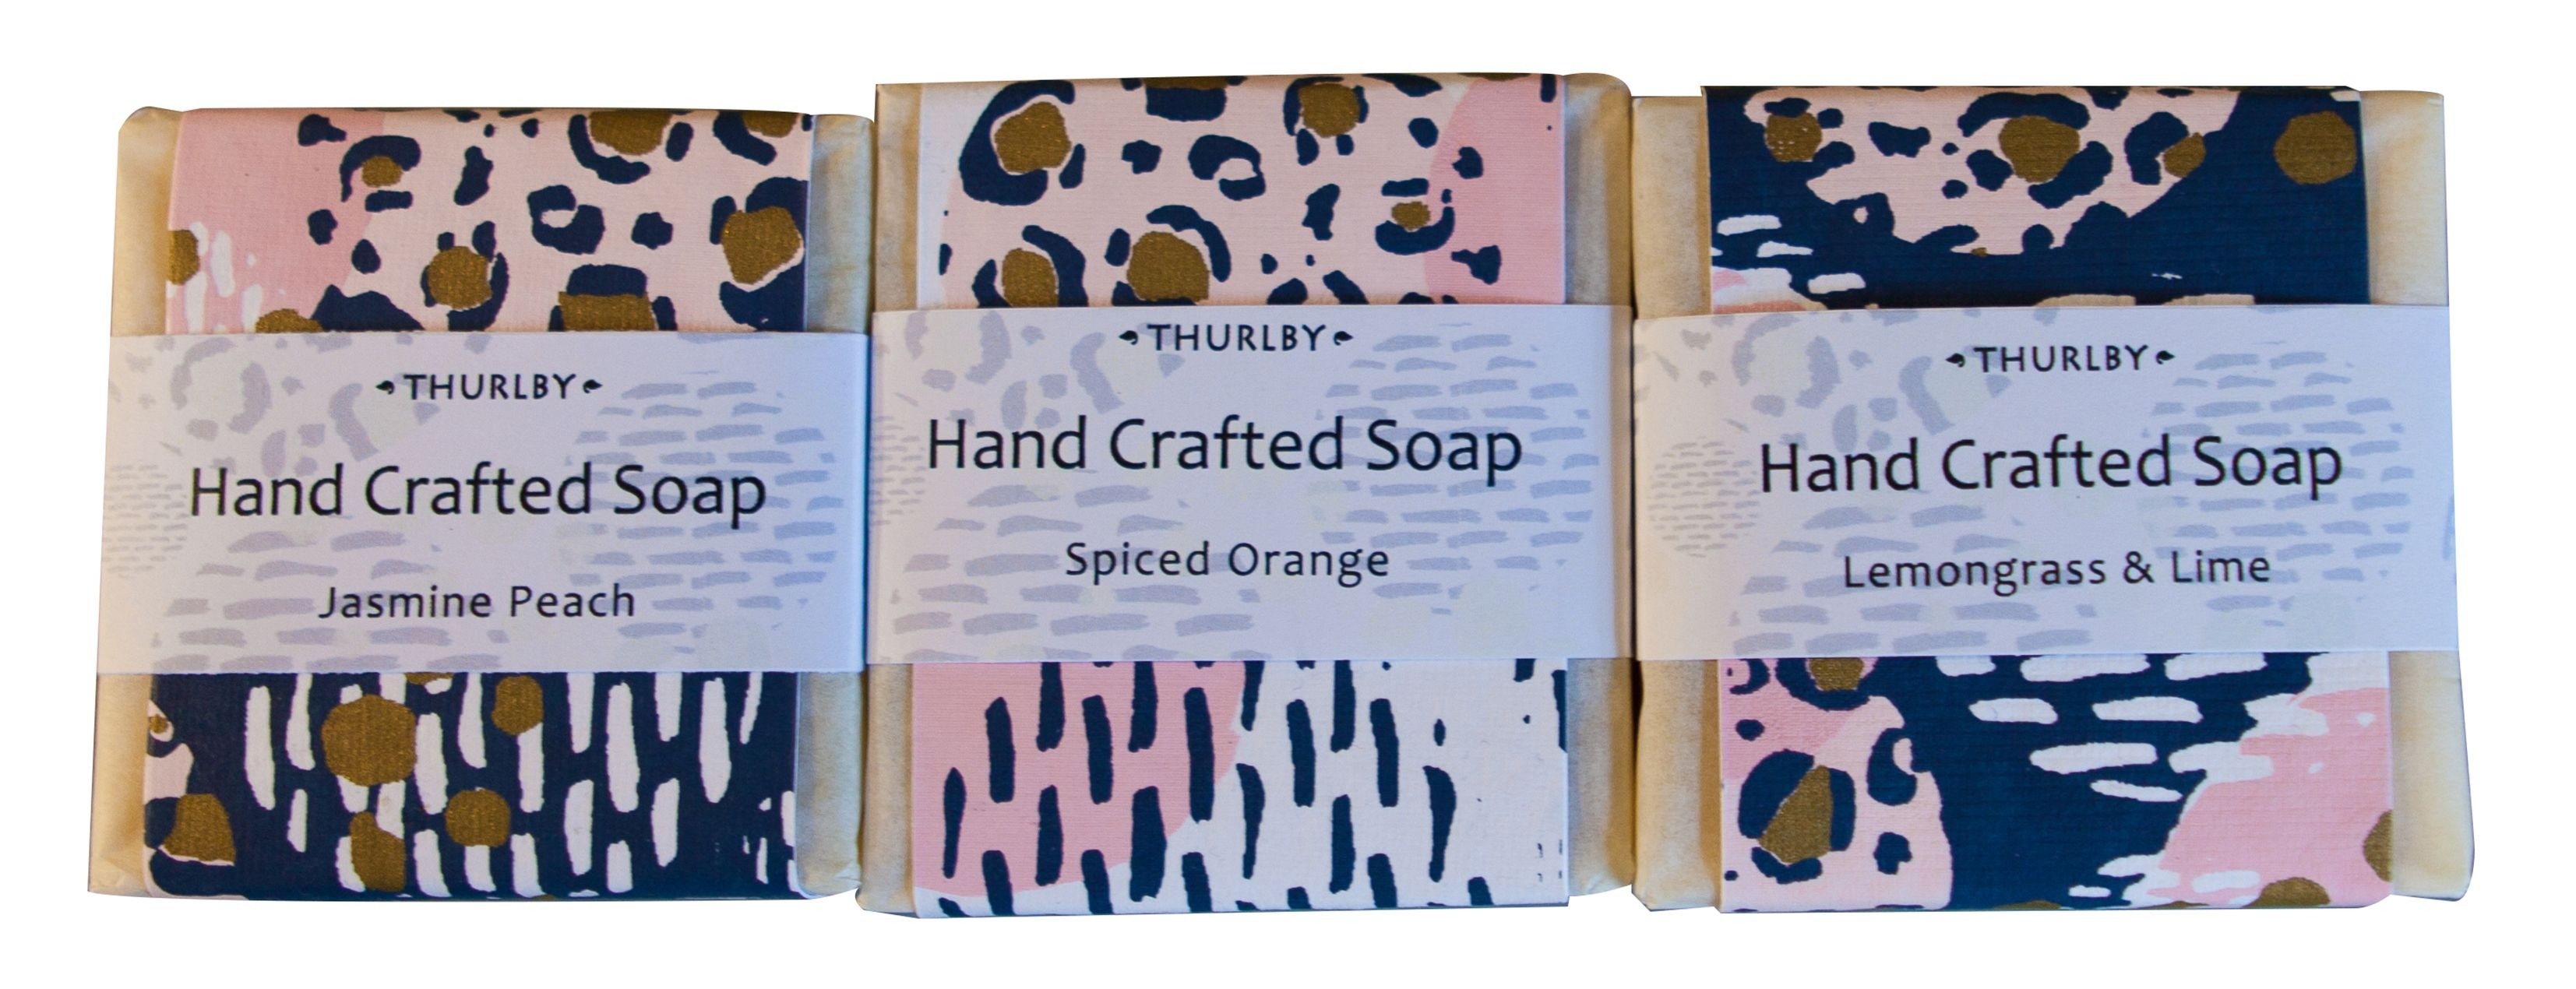 Thurlby Herb soap - orange spice